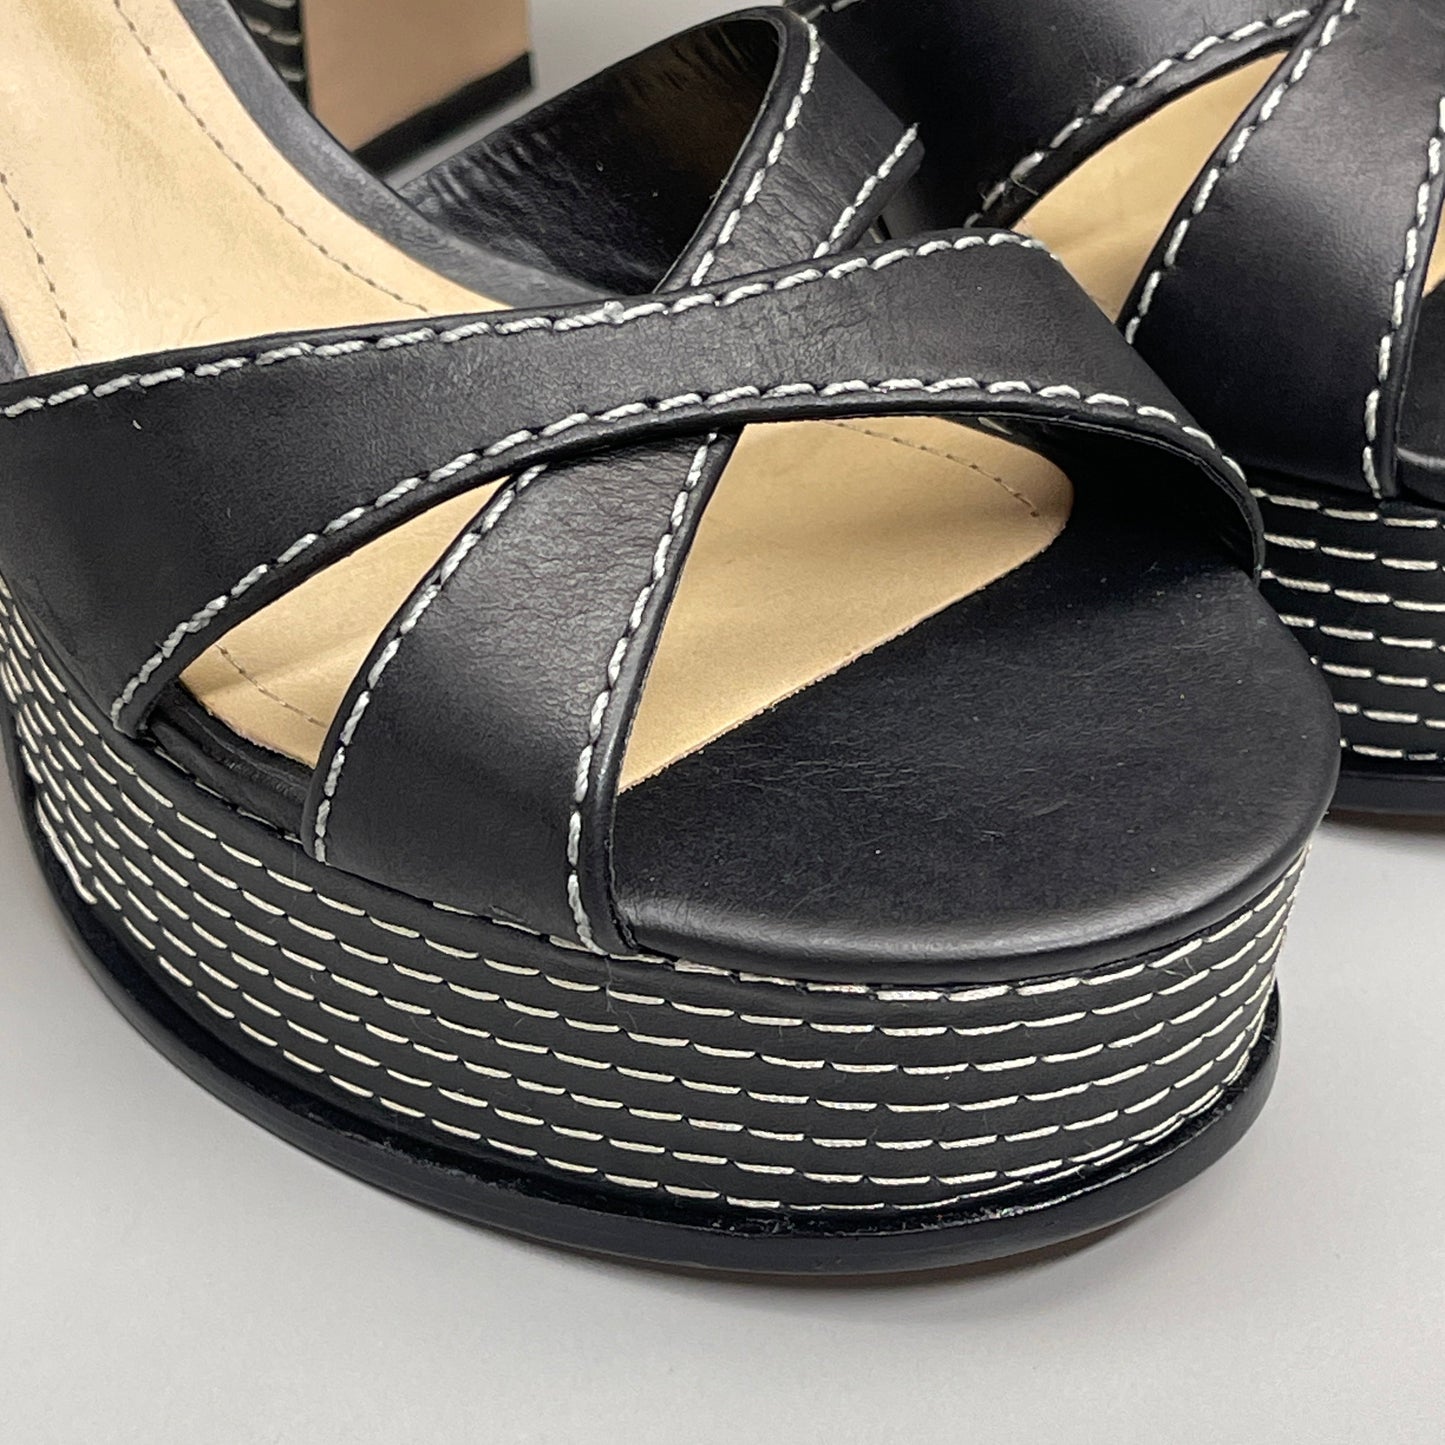 SCHUTZ Keefa Casual Women's Leather Sandal Black Platform 4" Heel Shoes Sz 6B (New)